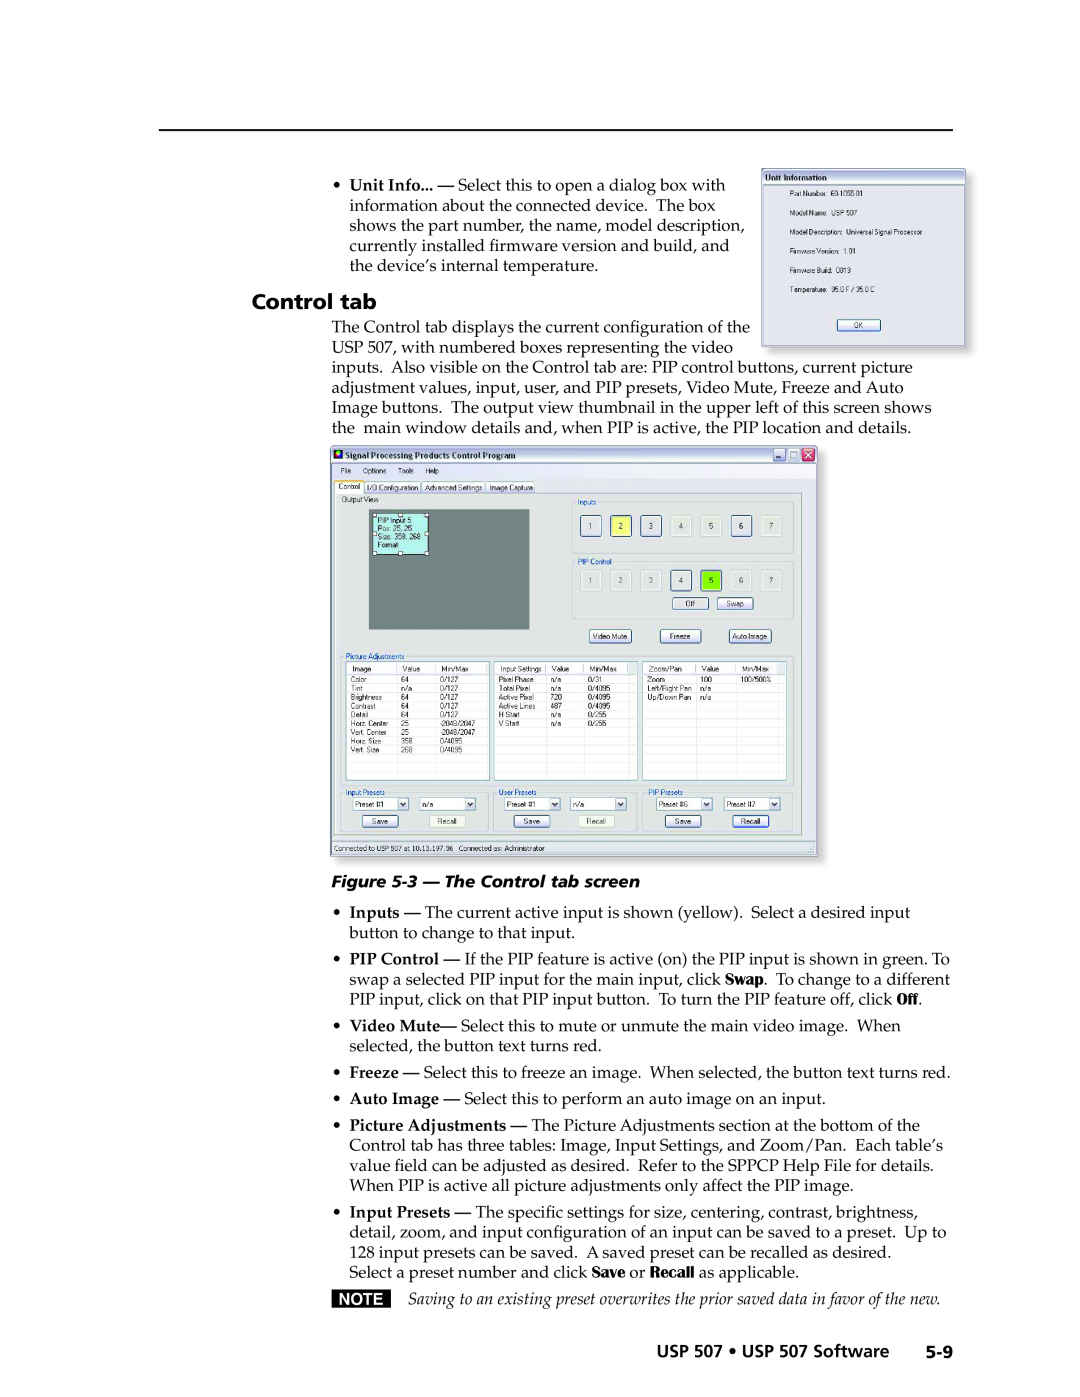 Extron electronic manual 3— The Control tab screen, USP 507 • USP 507 Software 